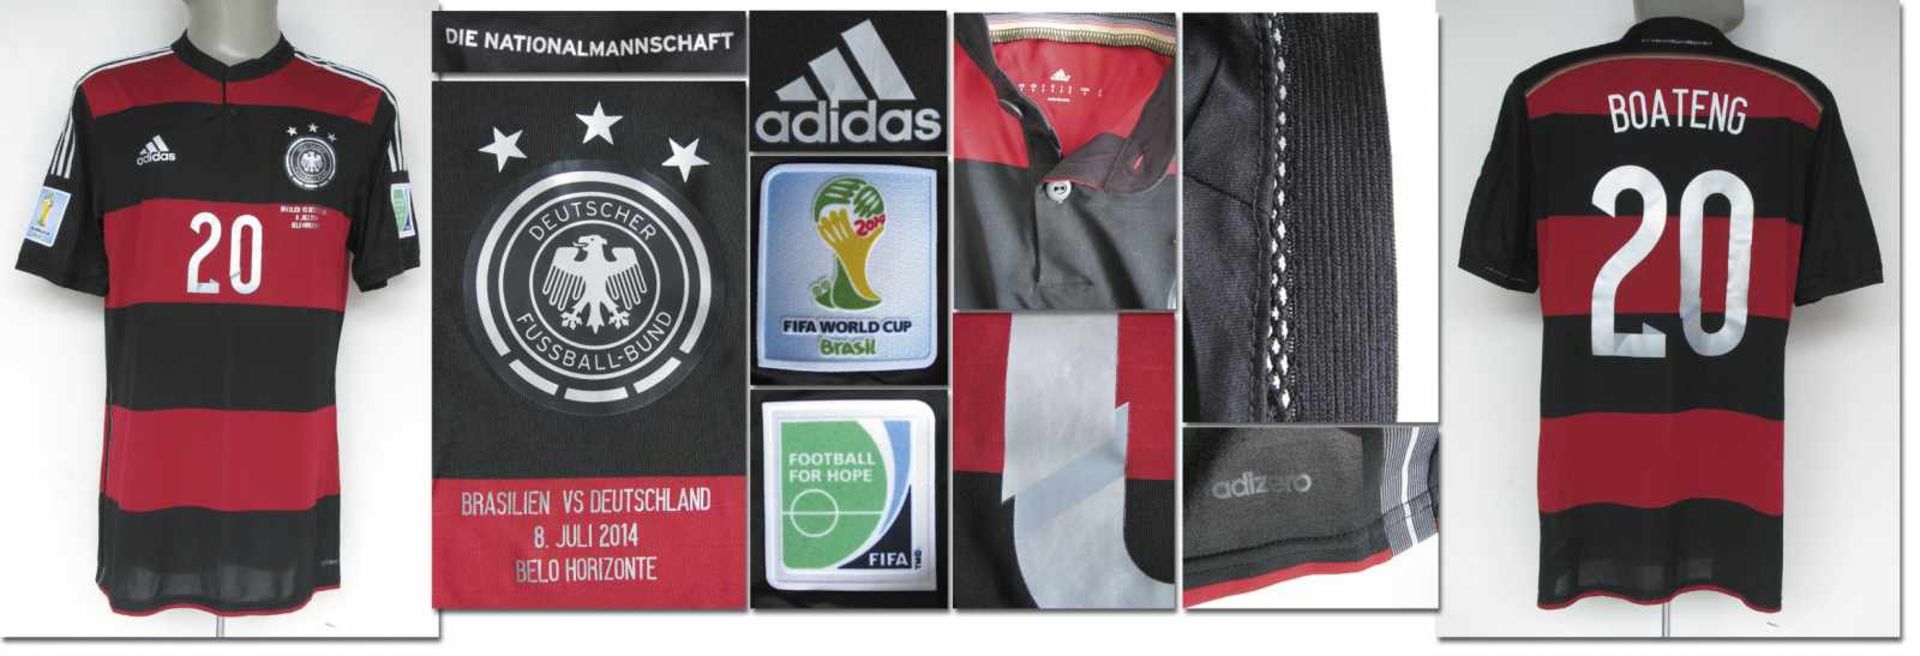 World Cup 2014 match worn football shirt Germany - Original match worn shirt Germany with numbert 20